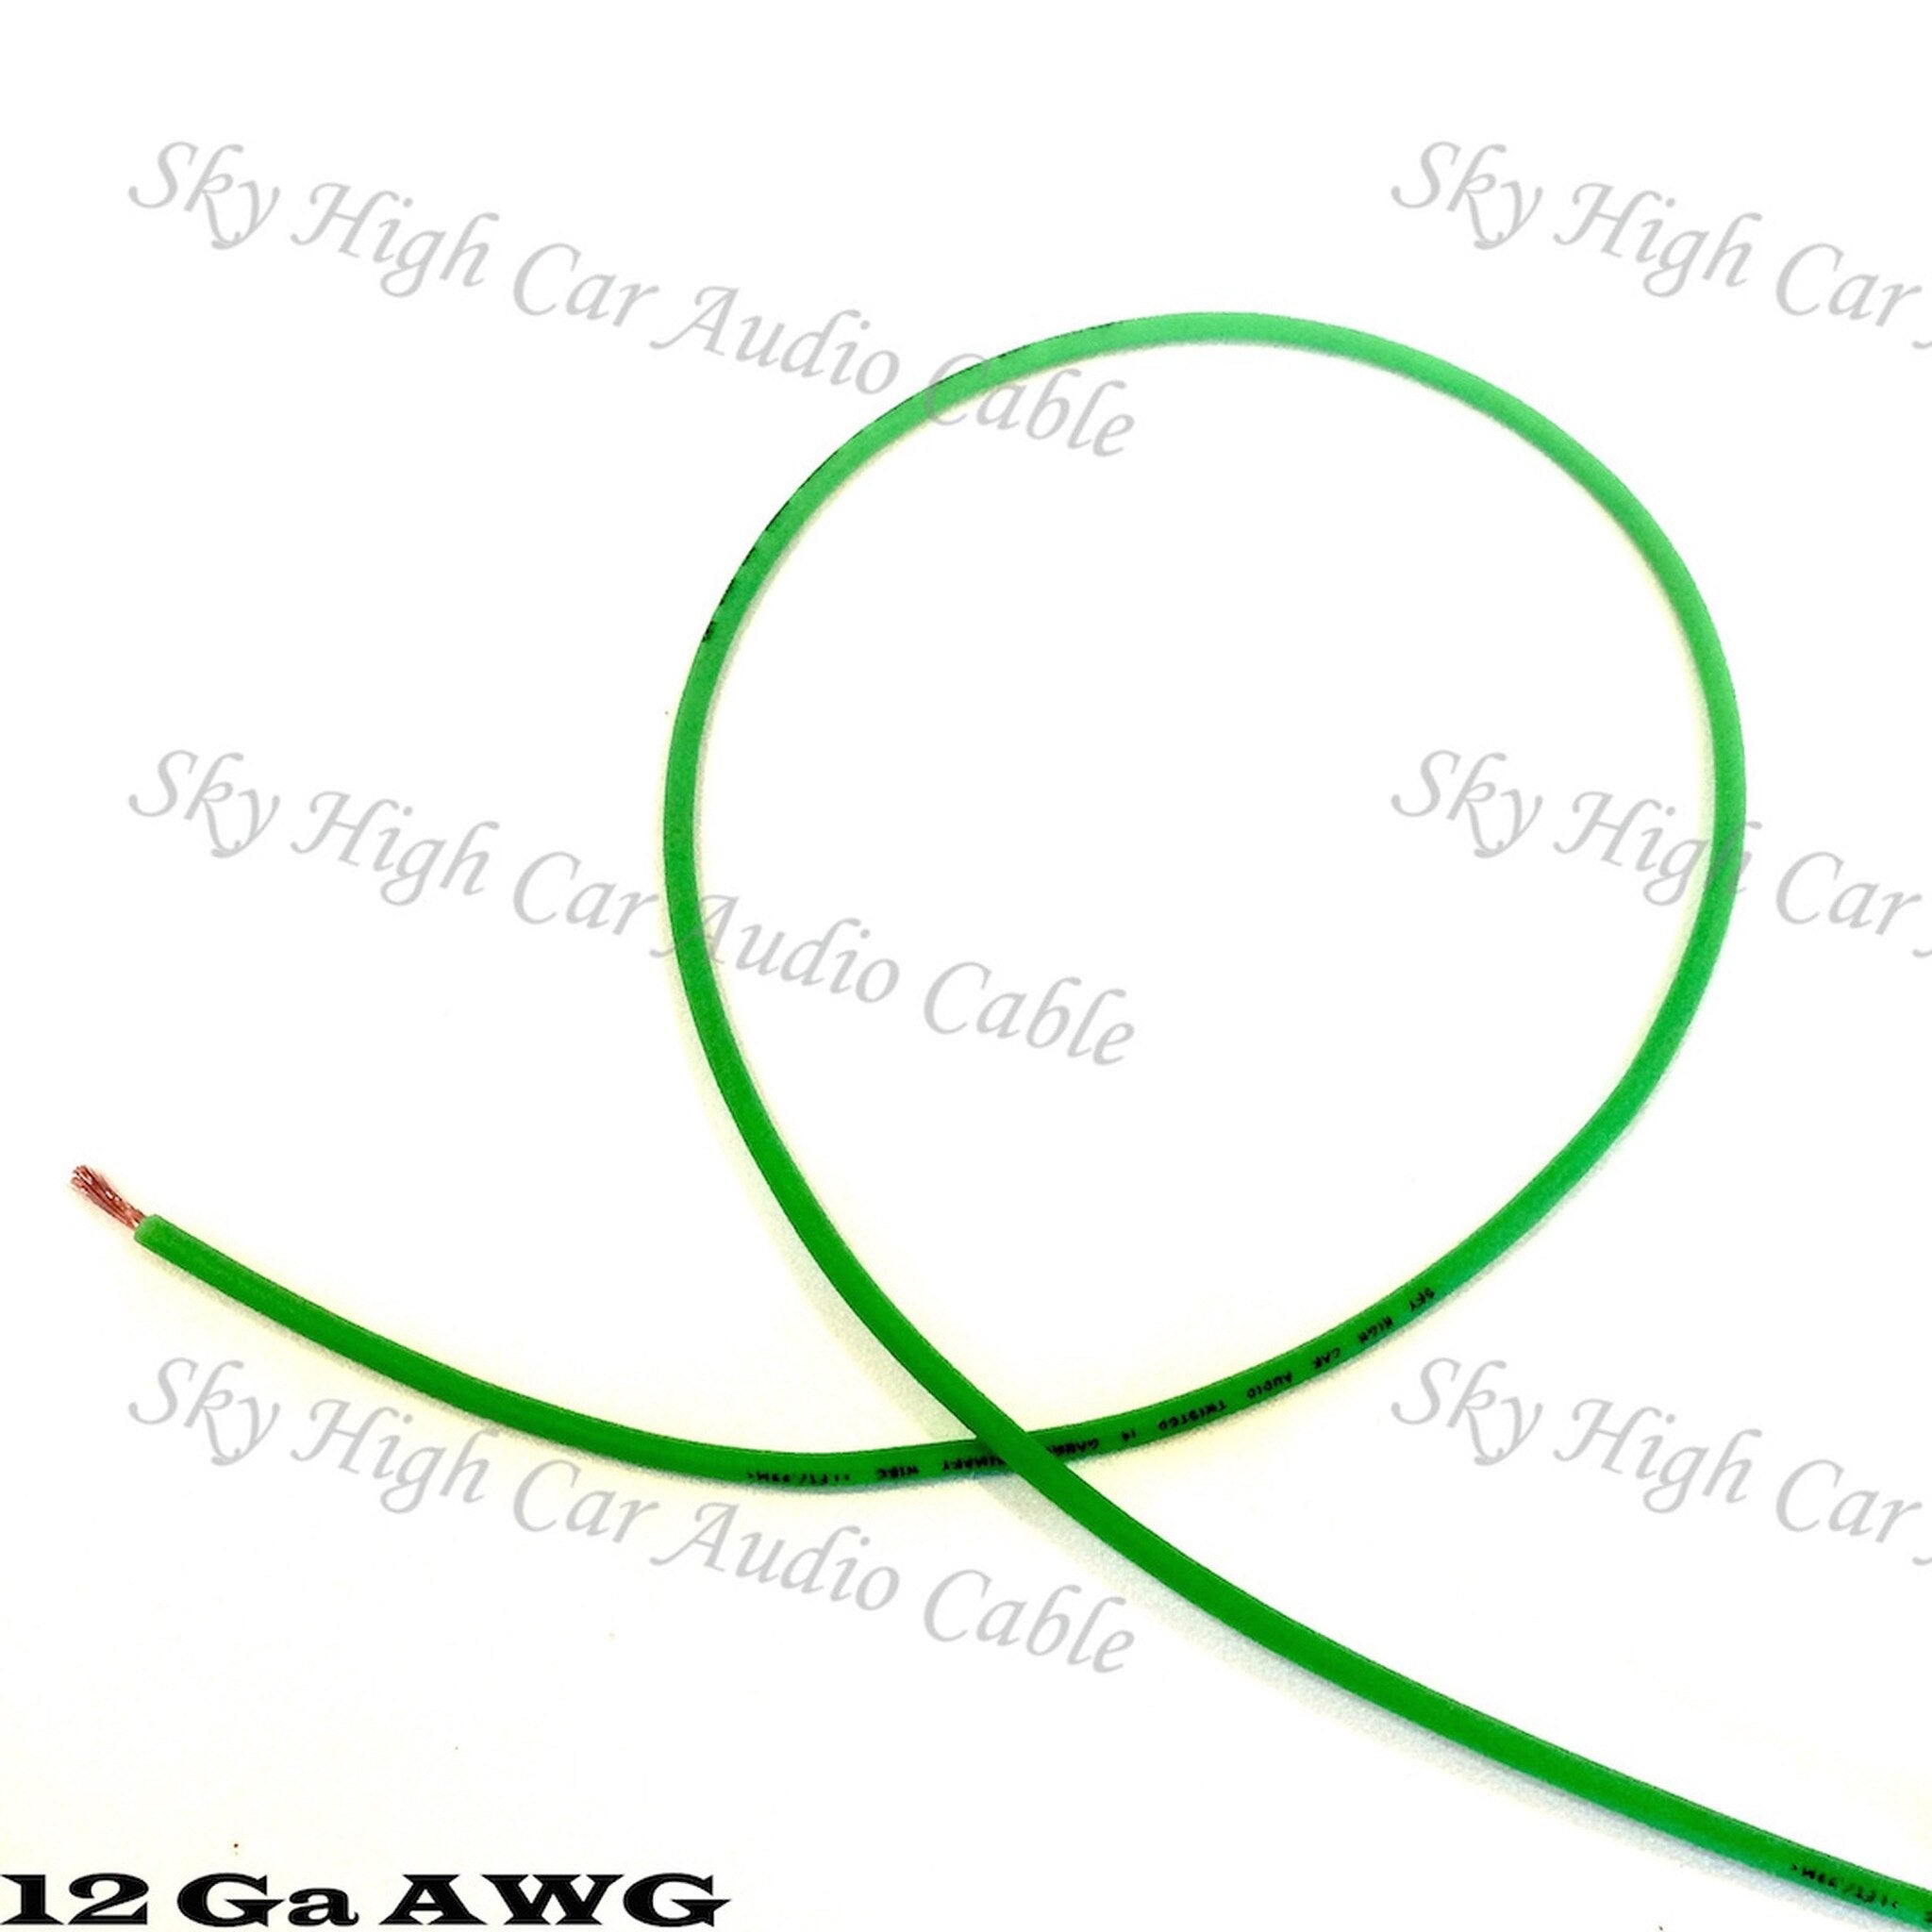 Sky High Car Audio CCA 12 Gauge Primary Wire 25ft-100ft